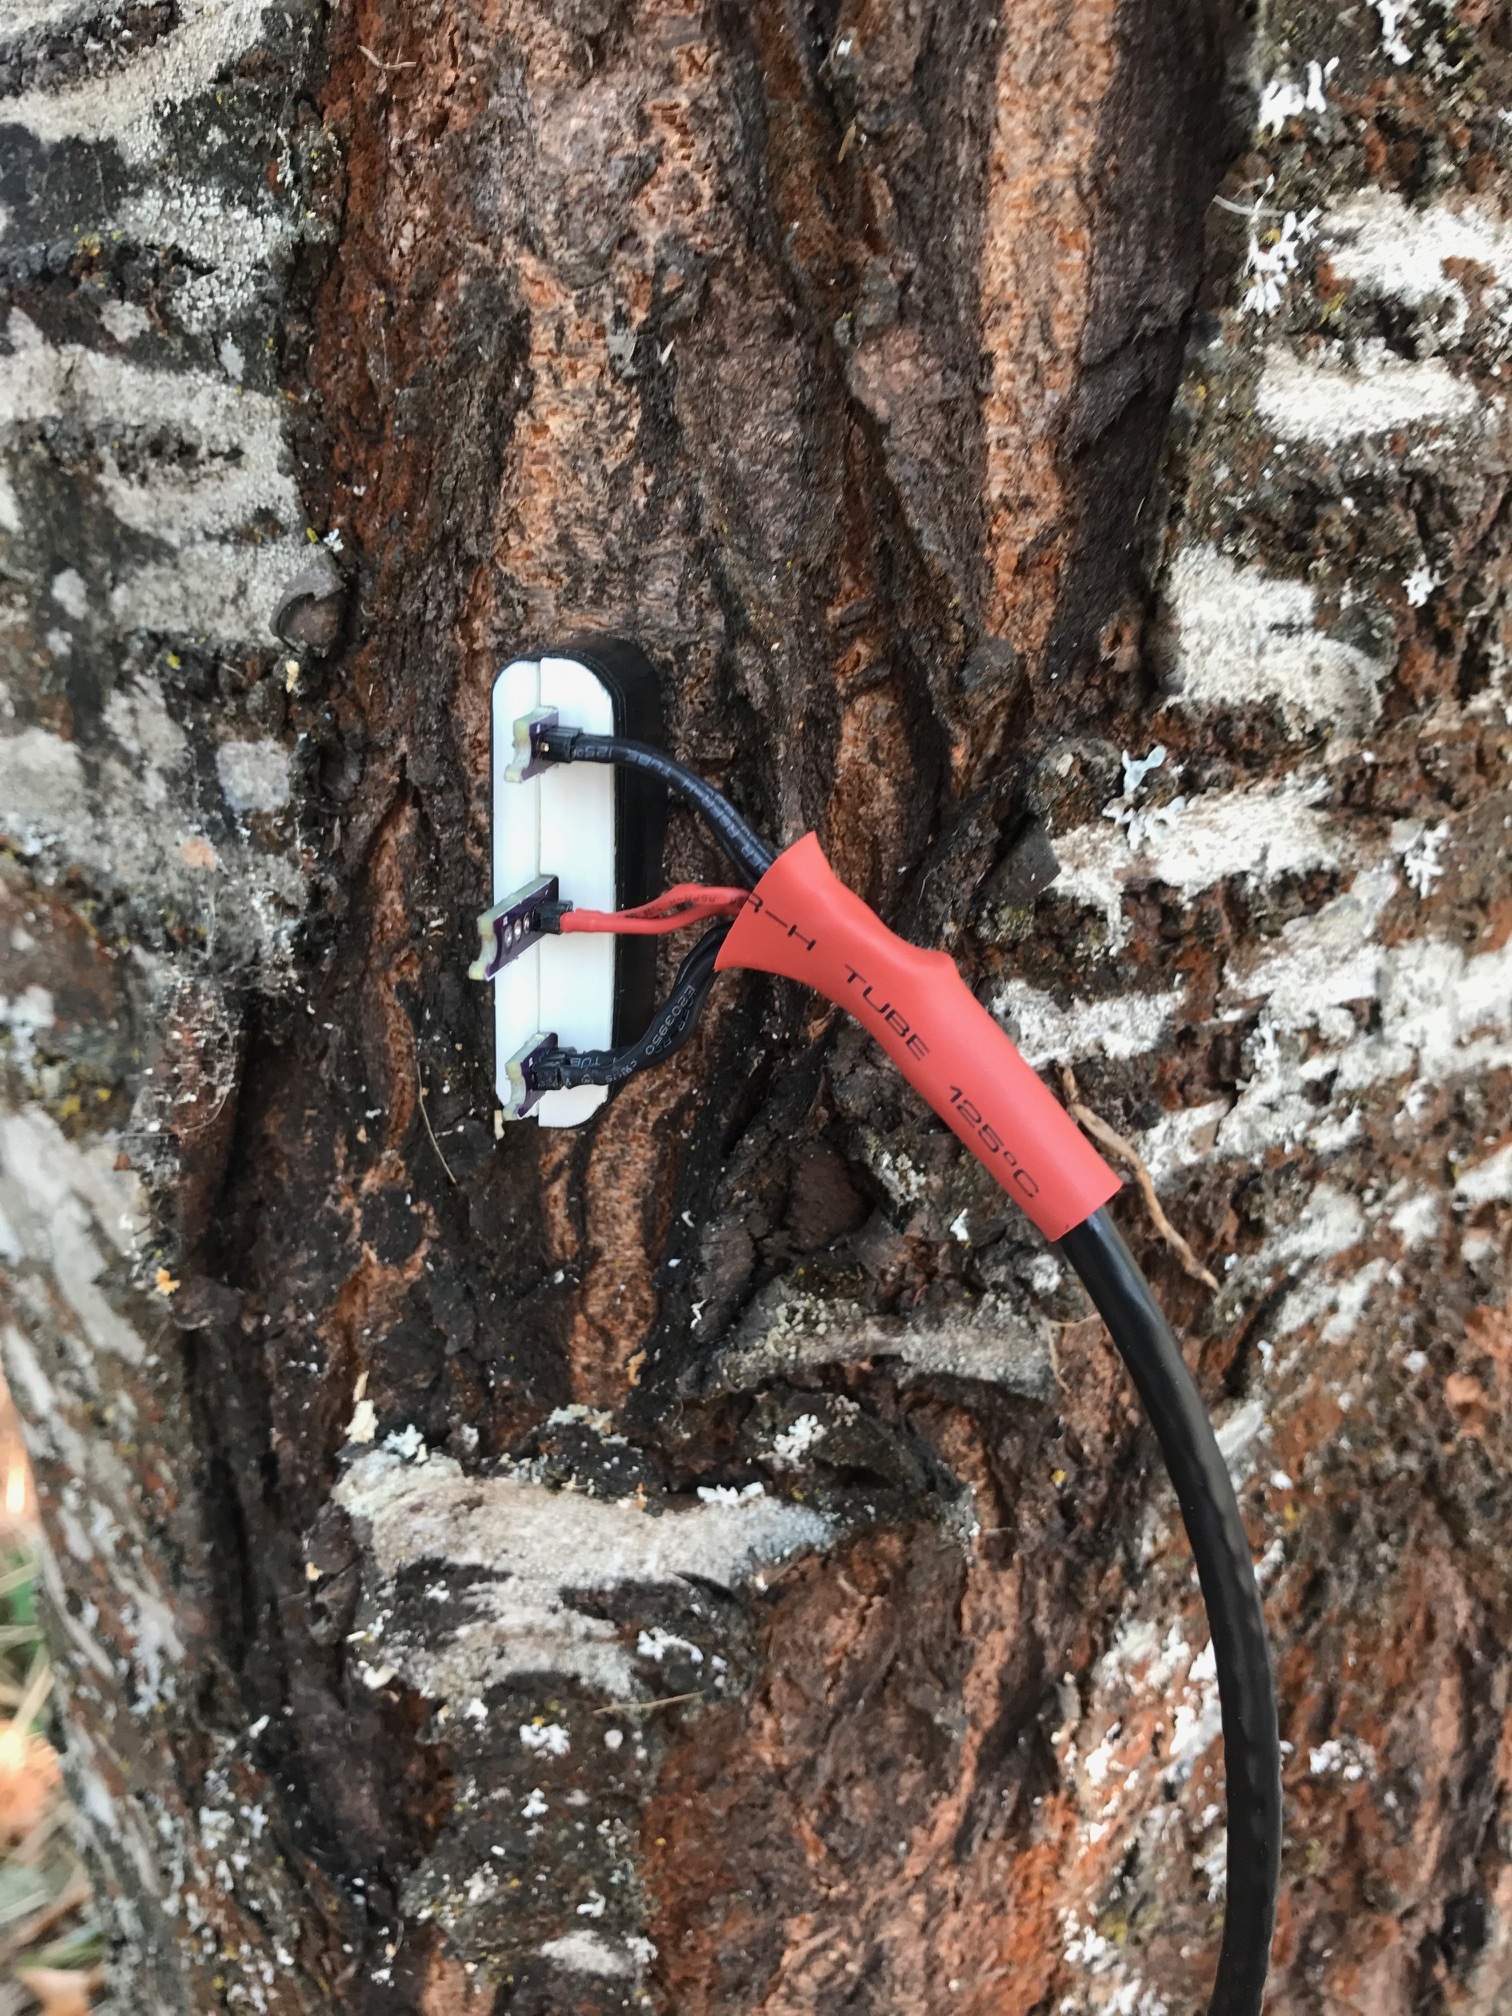 Our HRM probe prototype in the wild cherry tree! (8/16/2018)